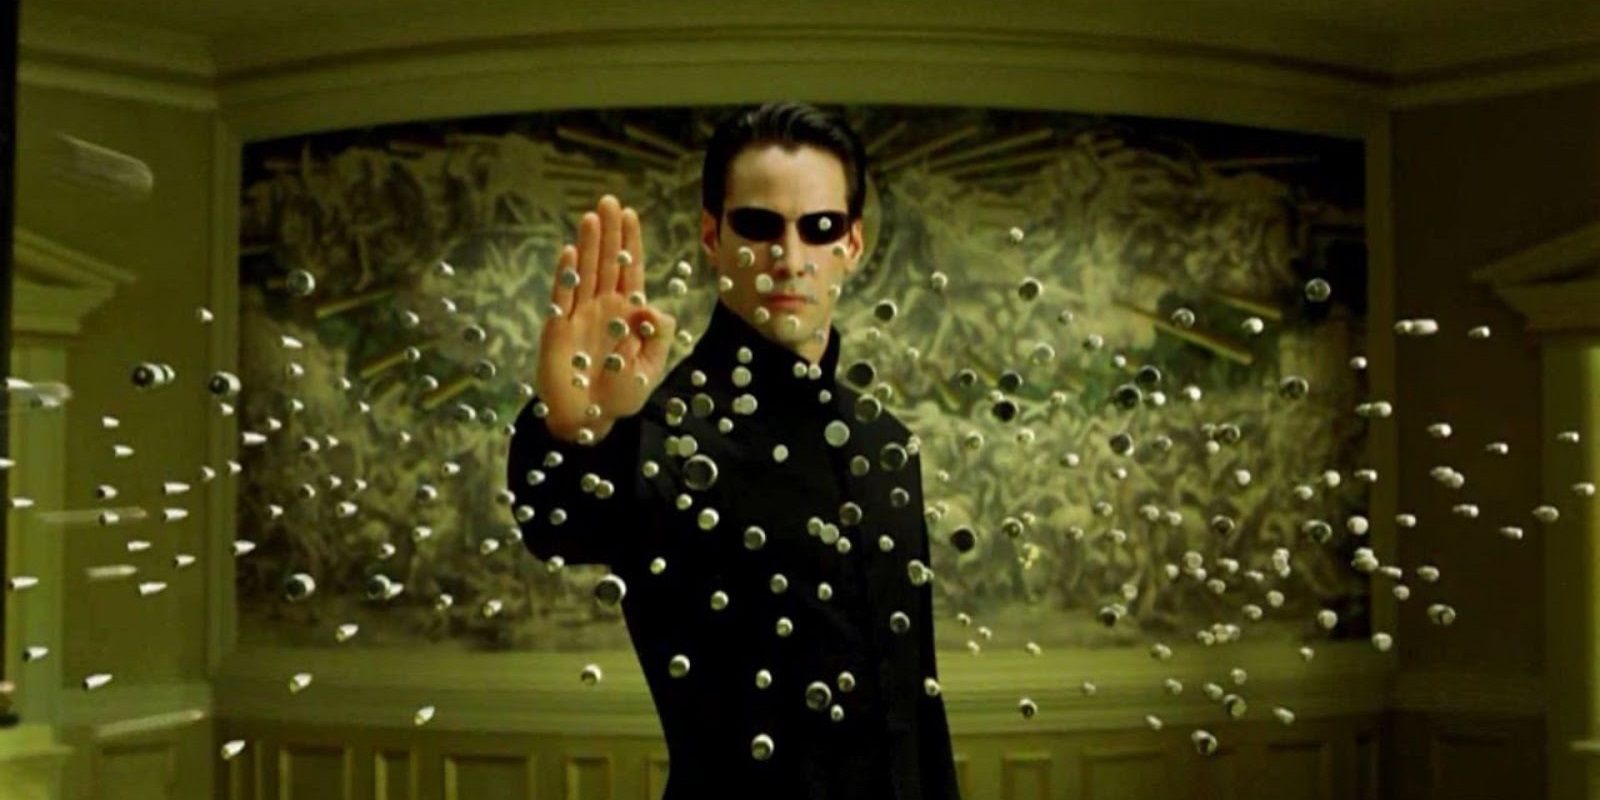 Neo stops bullets in the Matrix